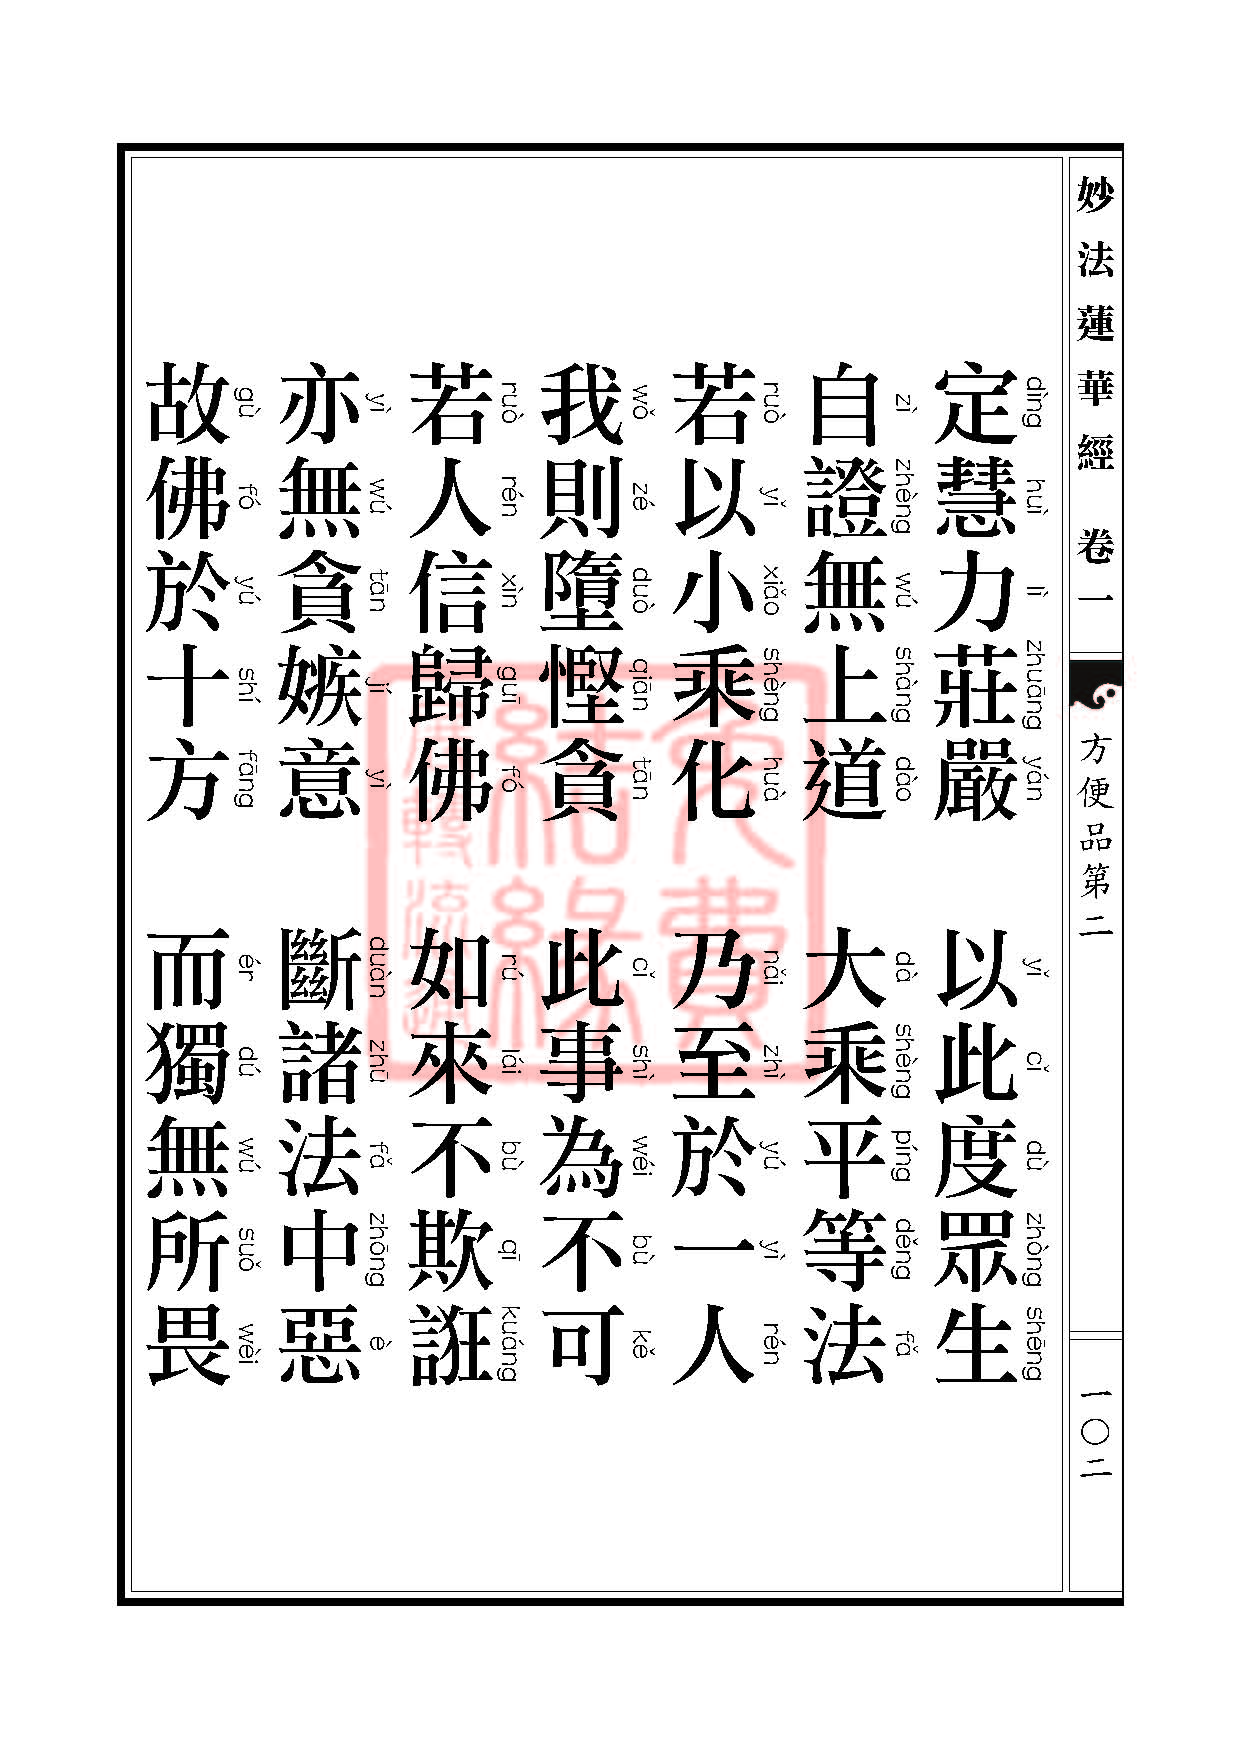 Book_FHJ_HK-A6-PY_Web_页面_102.jpg